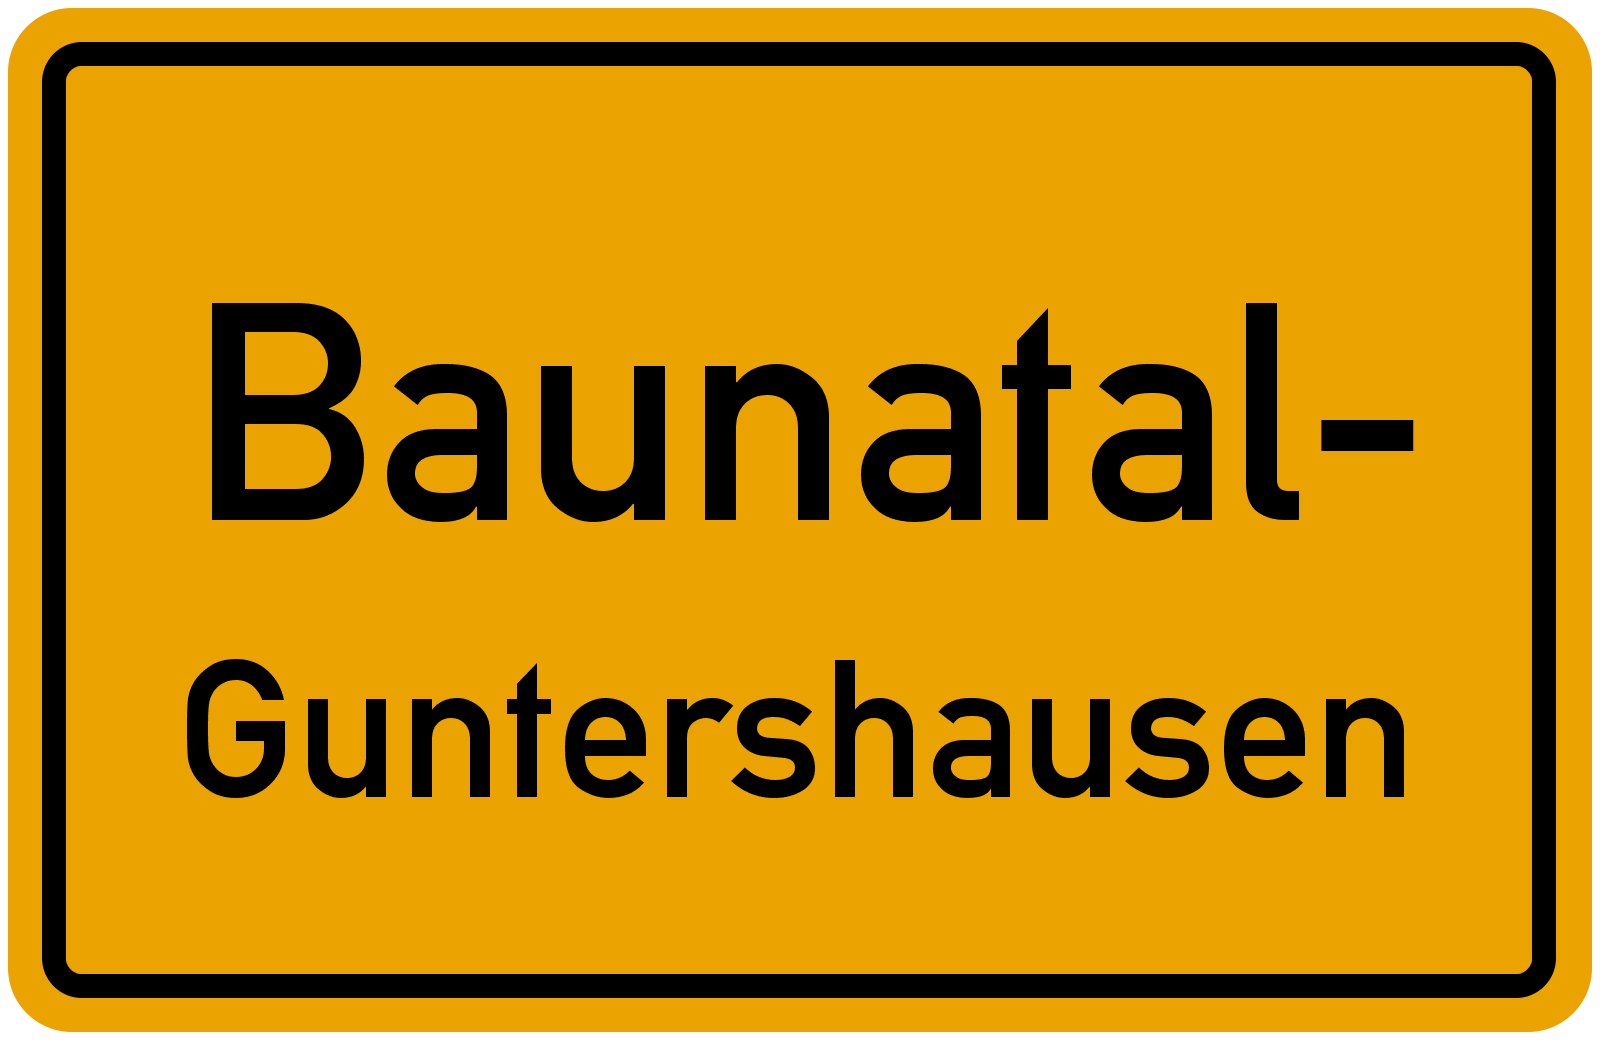 Guntershausen